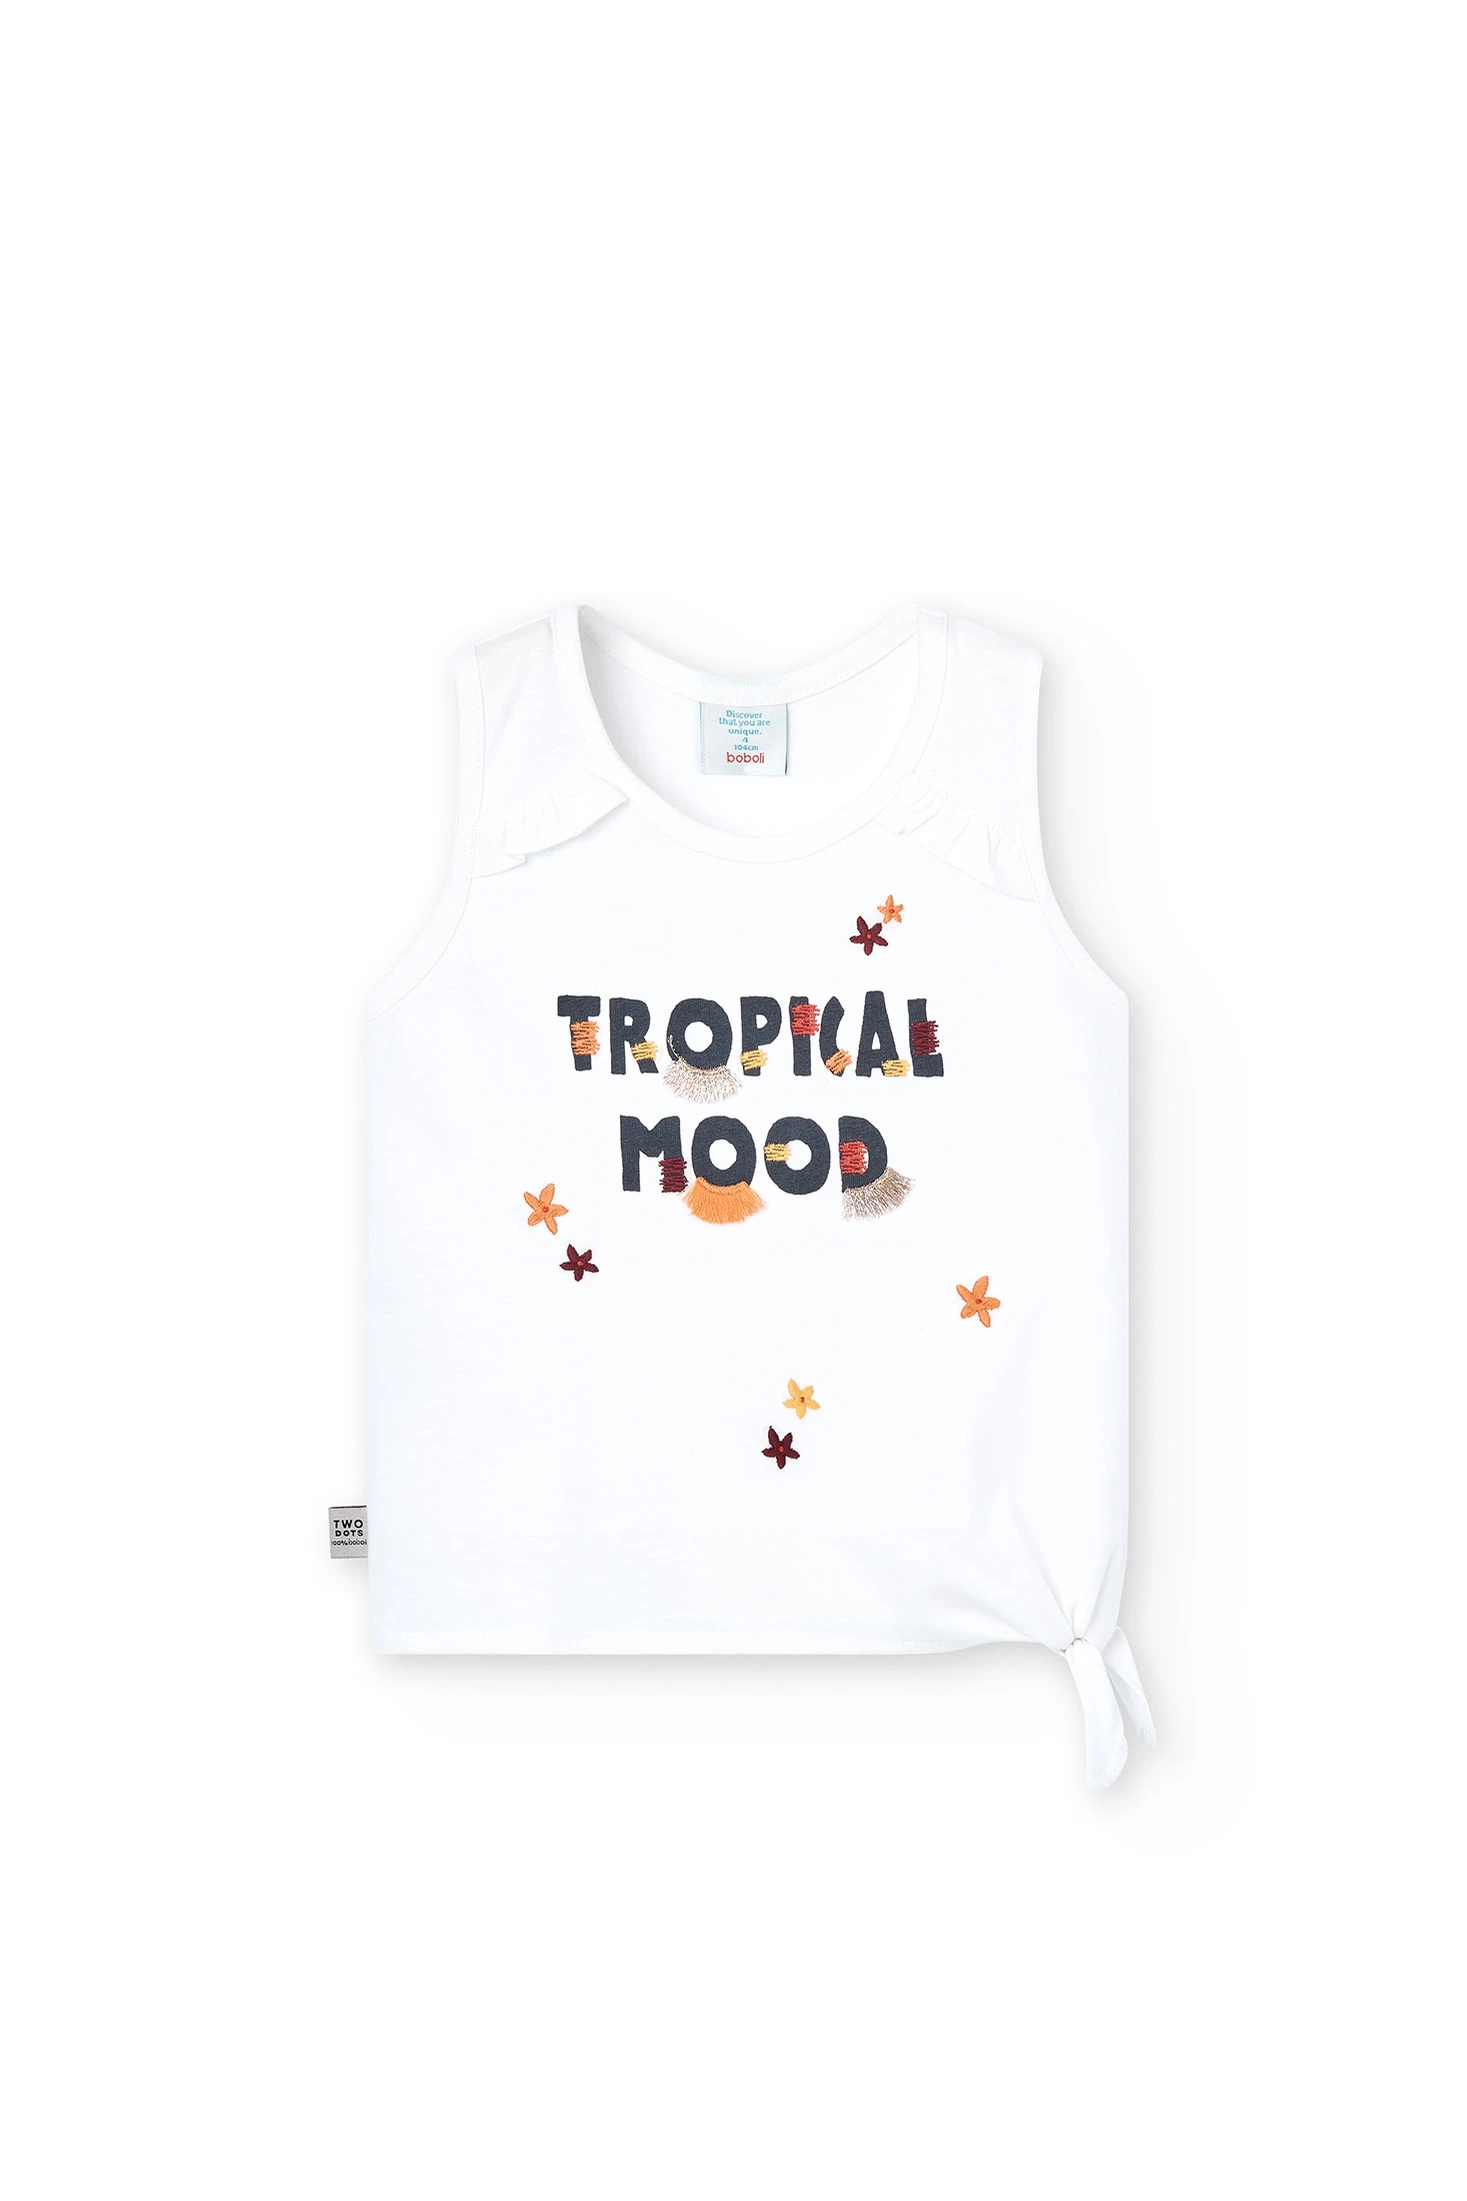 Camiseta naranja para niña : comprar online - Camisetas, Camisetas de  tirantes